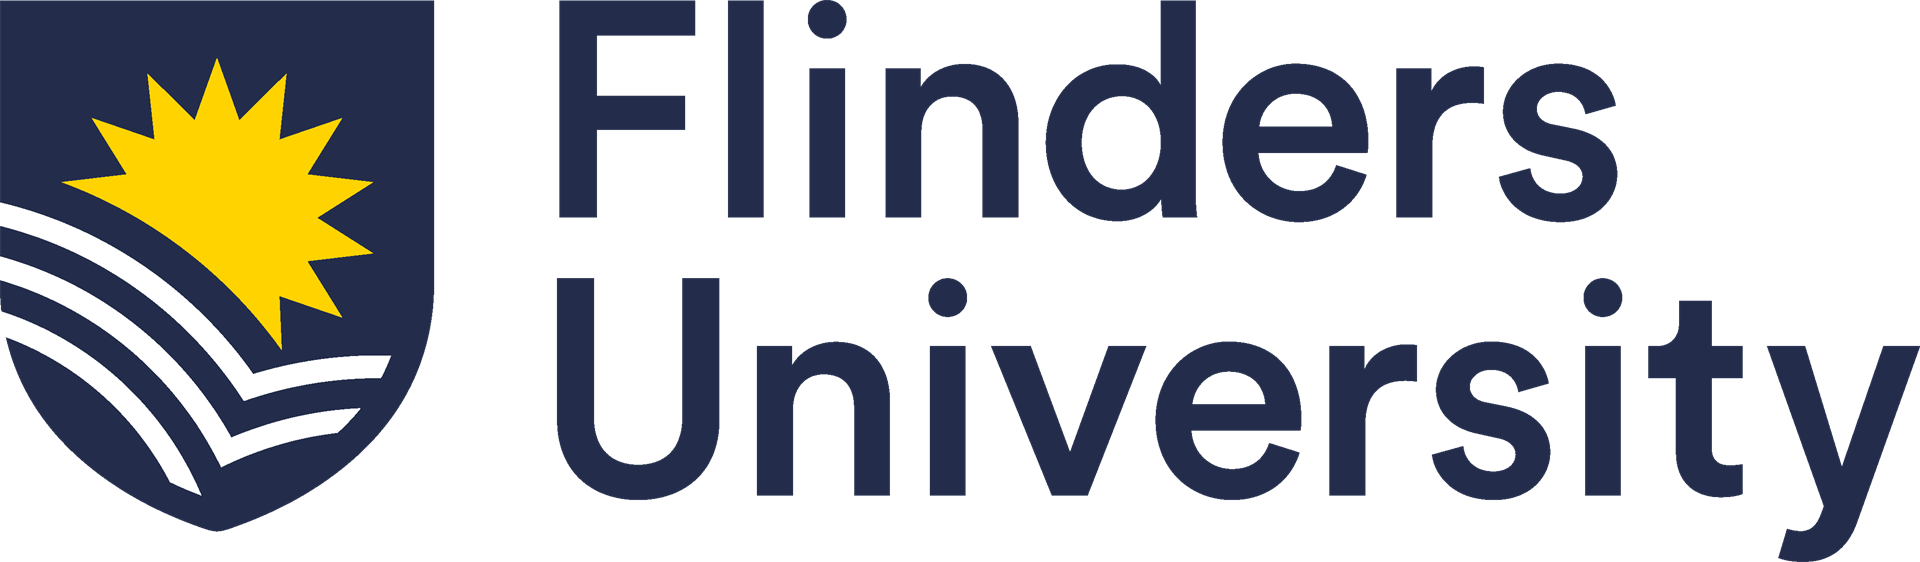 Flinders University logo